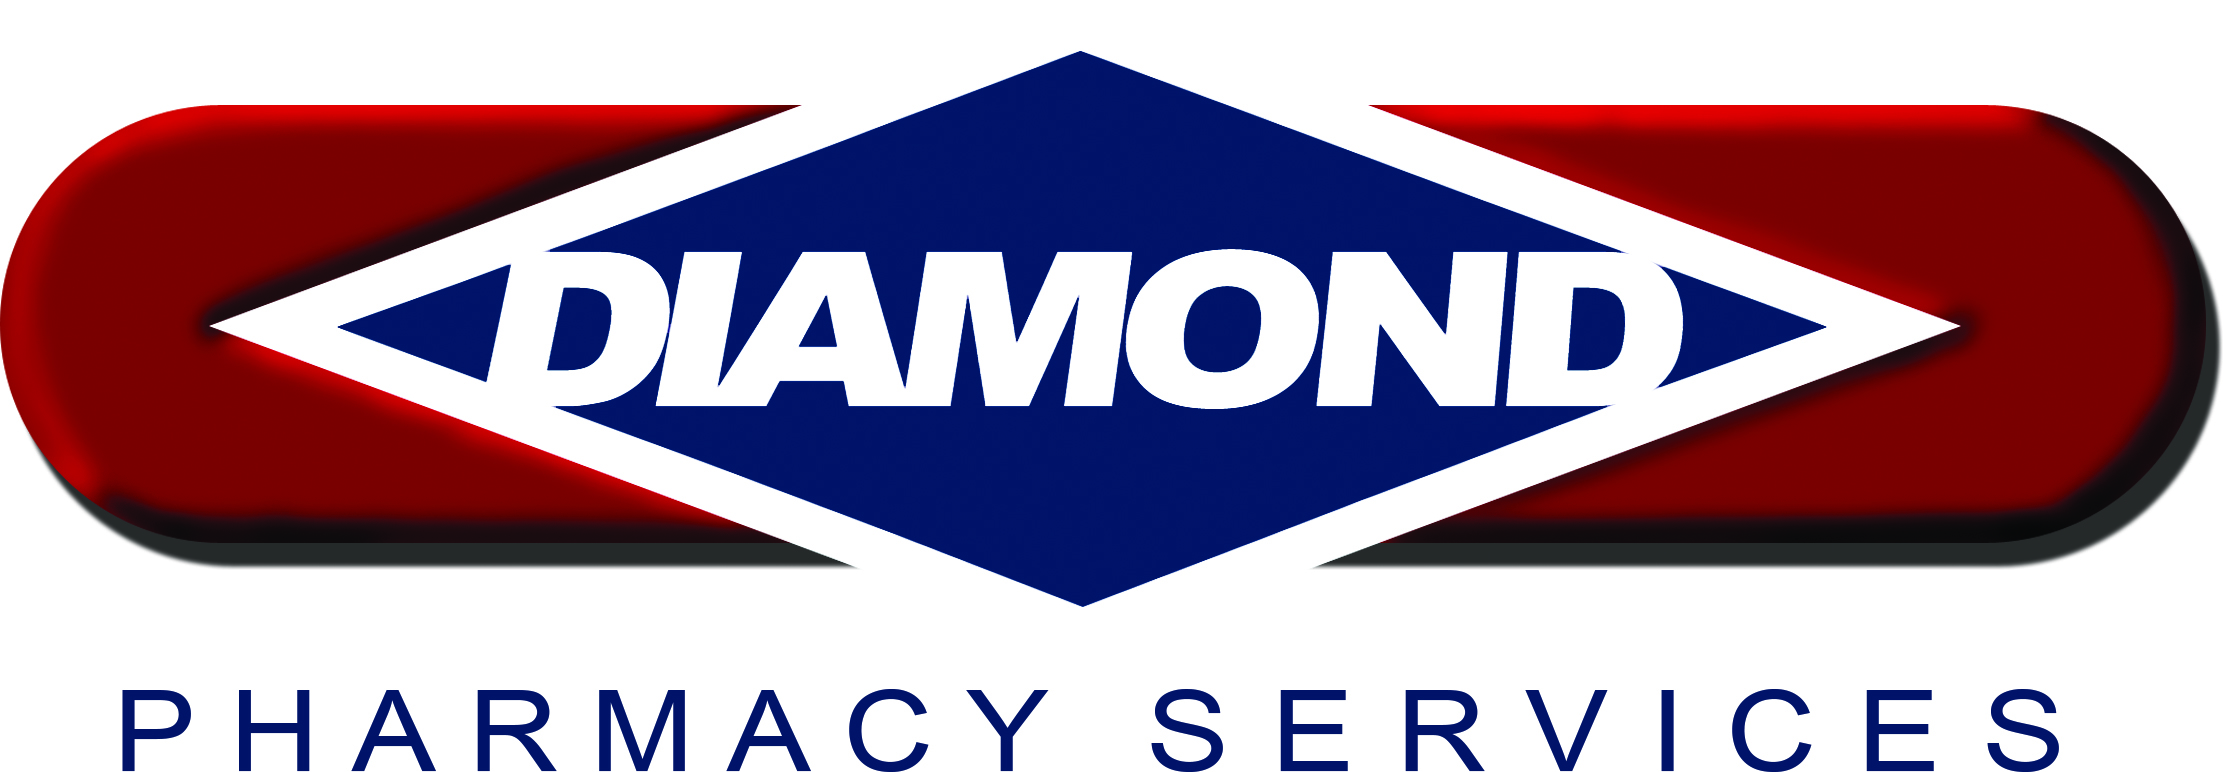 diamond pharmacy services logo